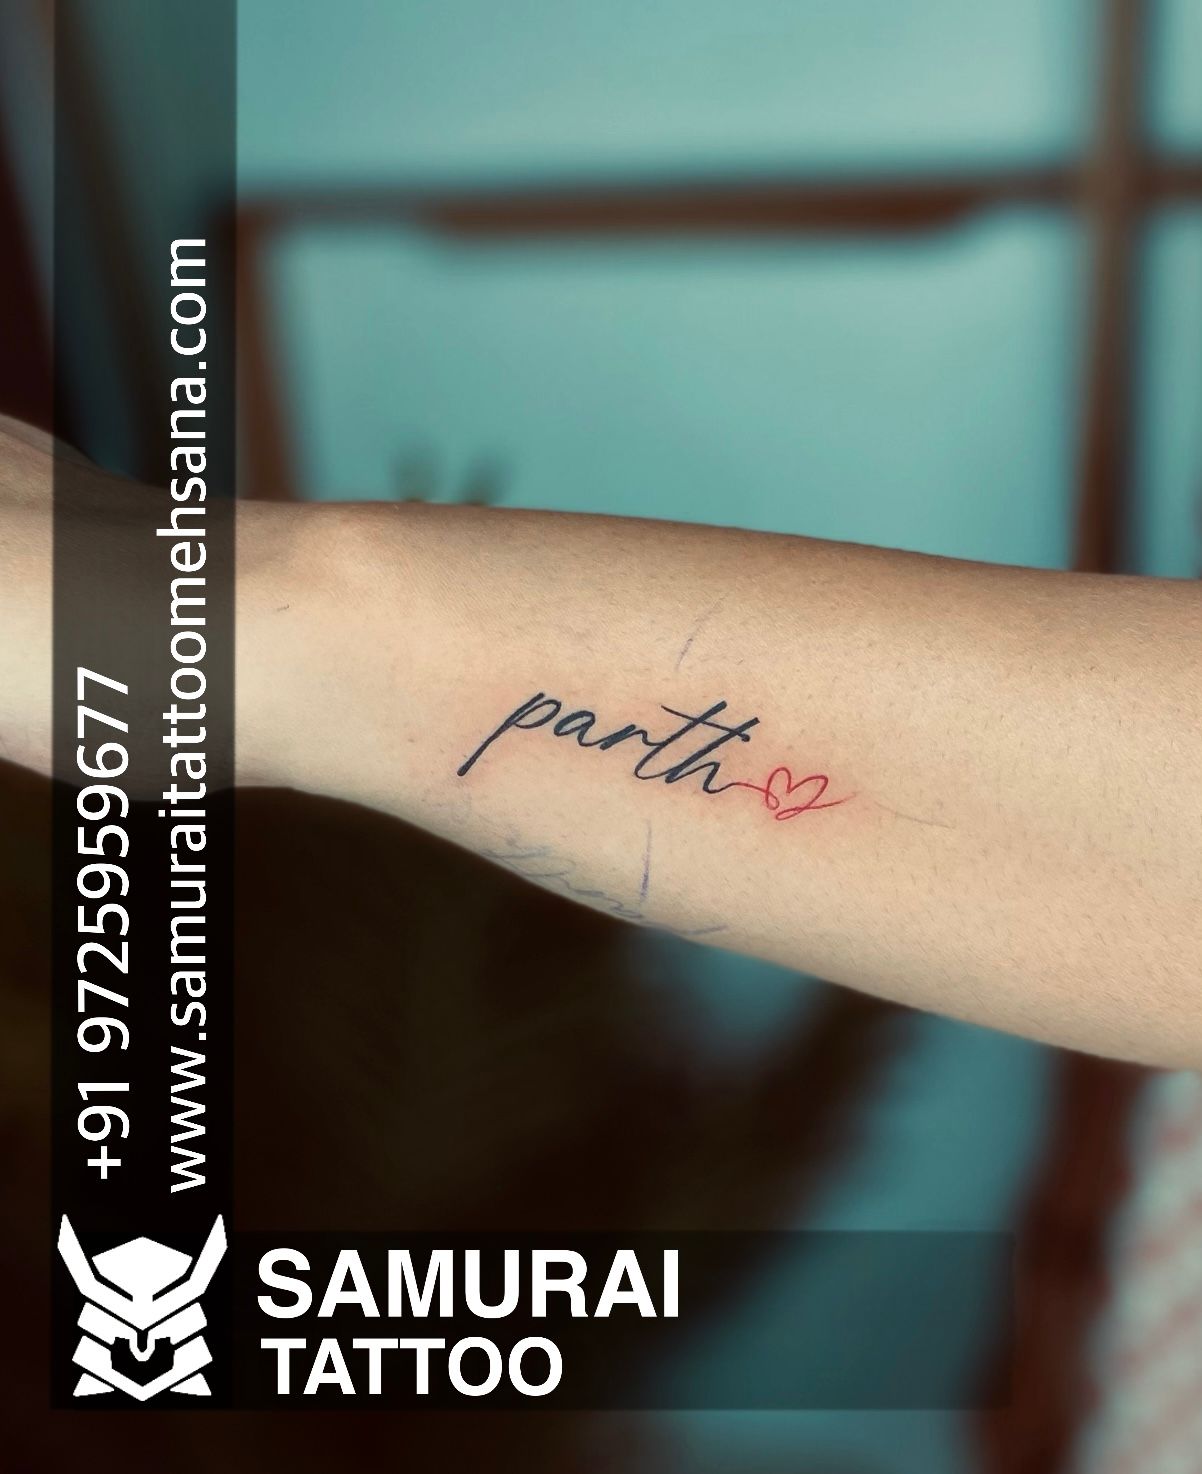 sai's tattoos on Instagram: 